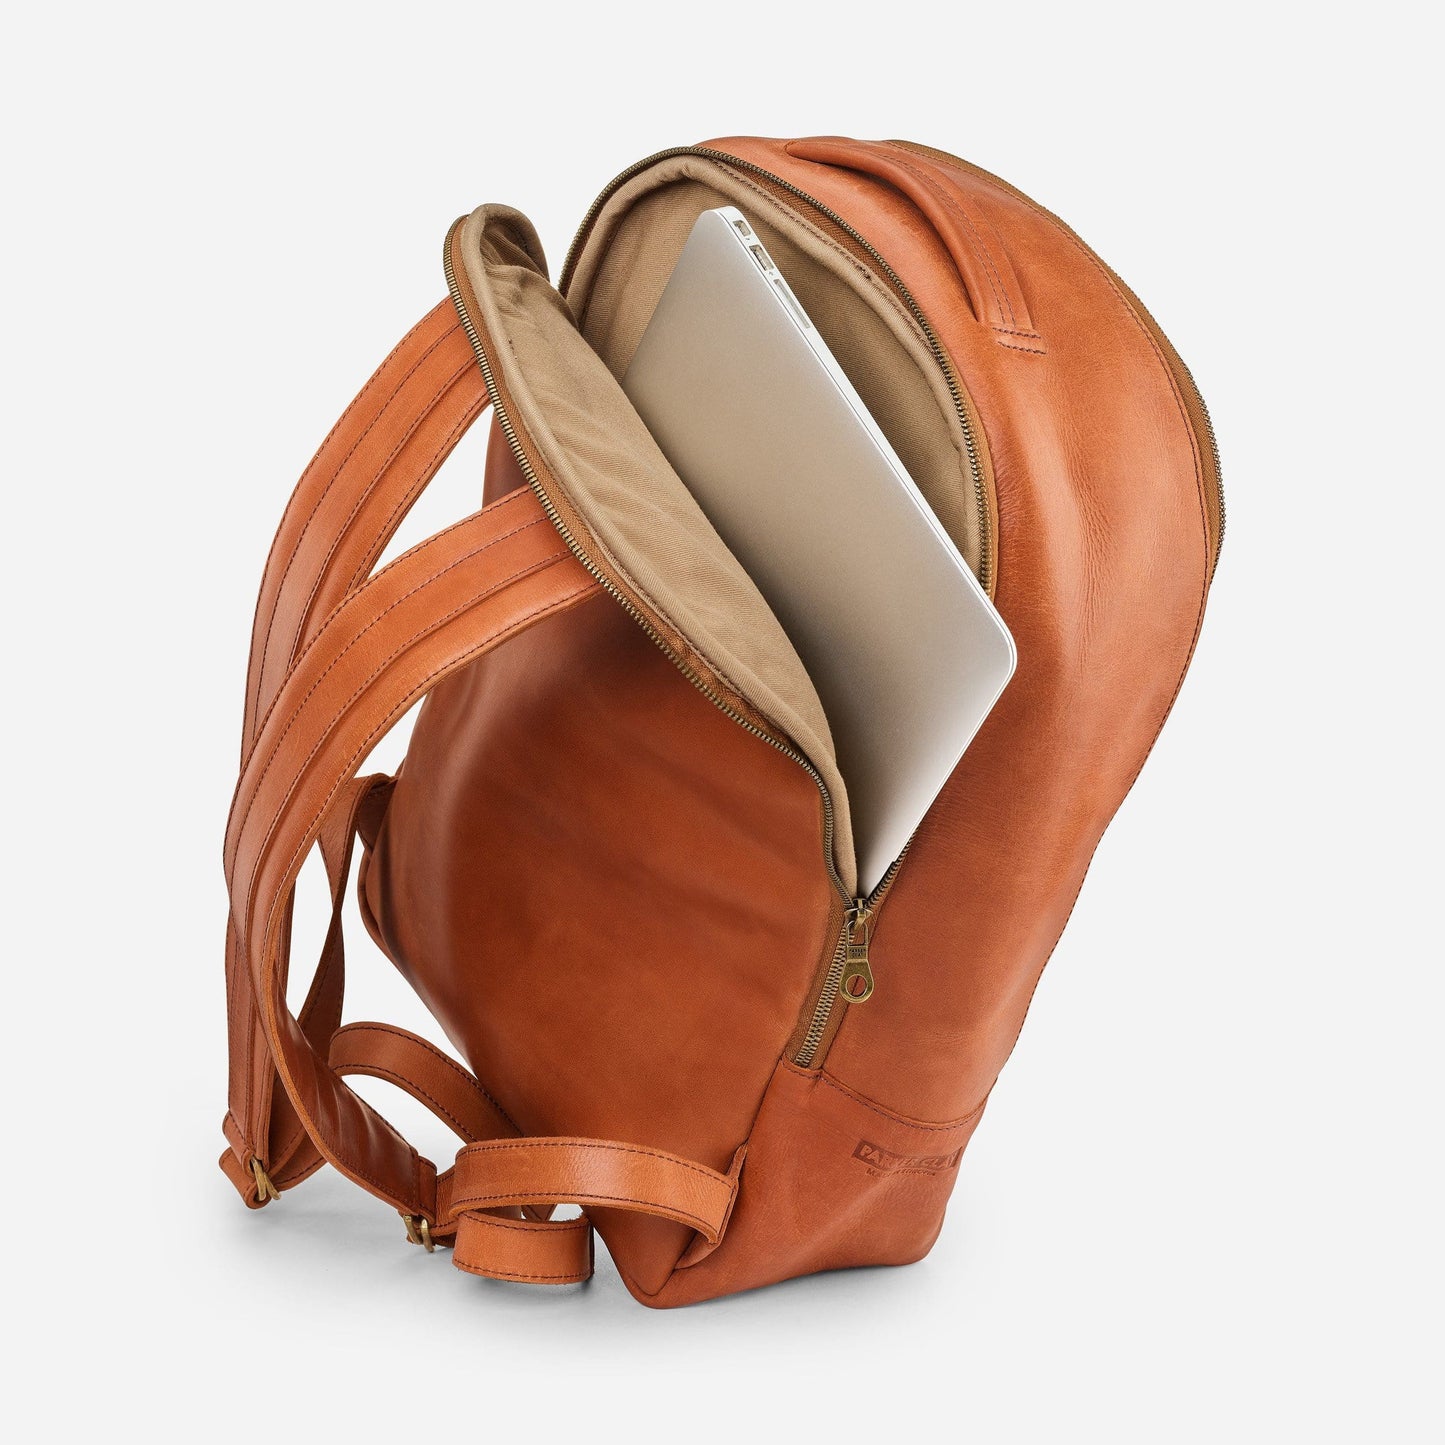 Custom Parker Clay Atlas Backpack